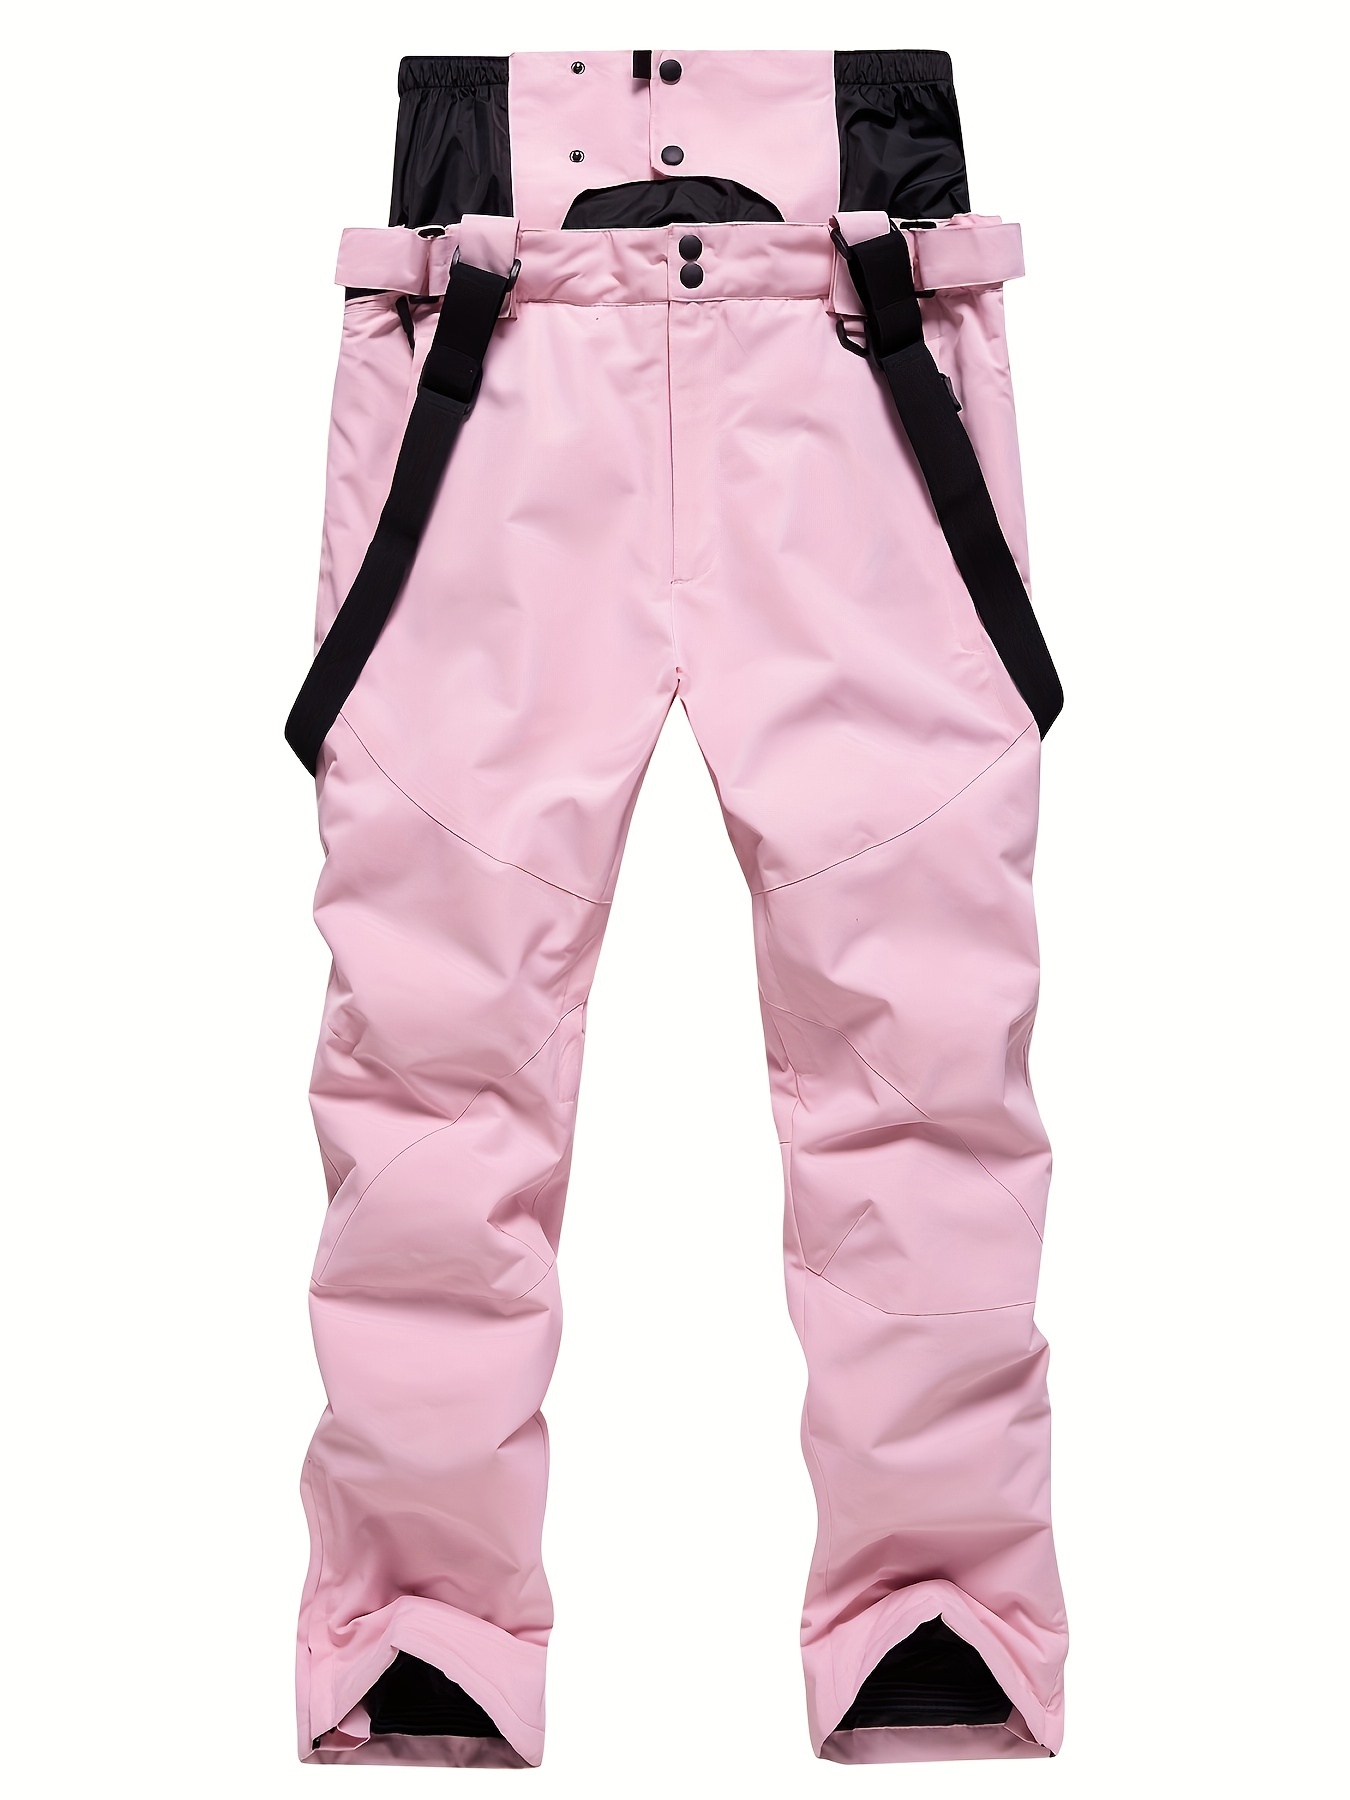 Women Insulated Snow Pants Waterproof Outdoor Ski Bibs with Adjustable  Checkered Suspenders Pink XL 